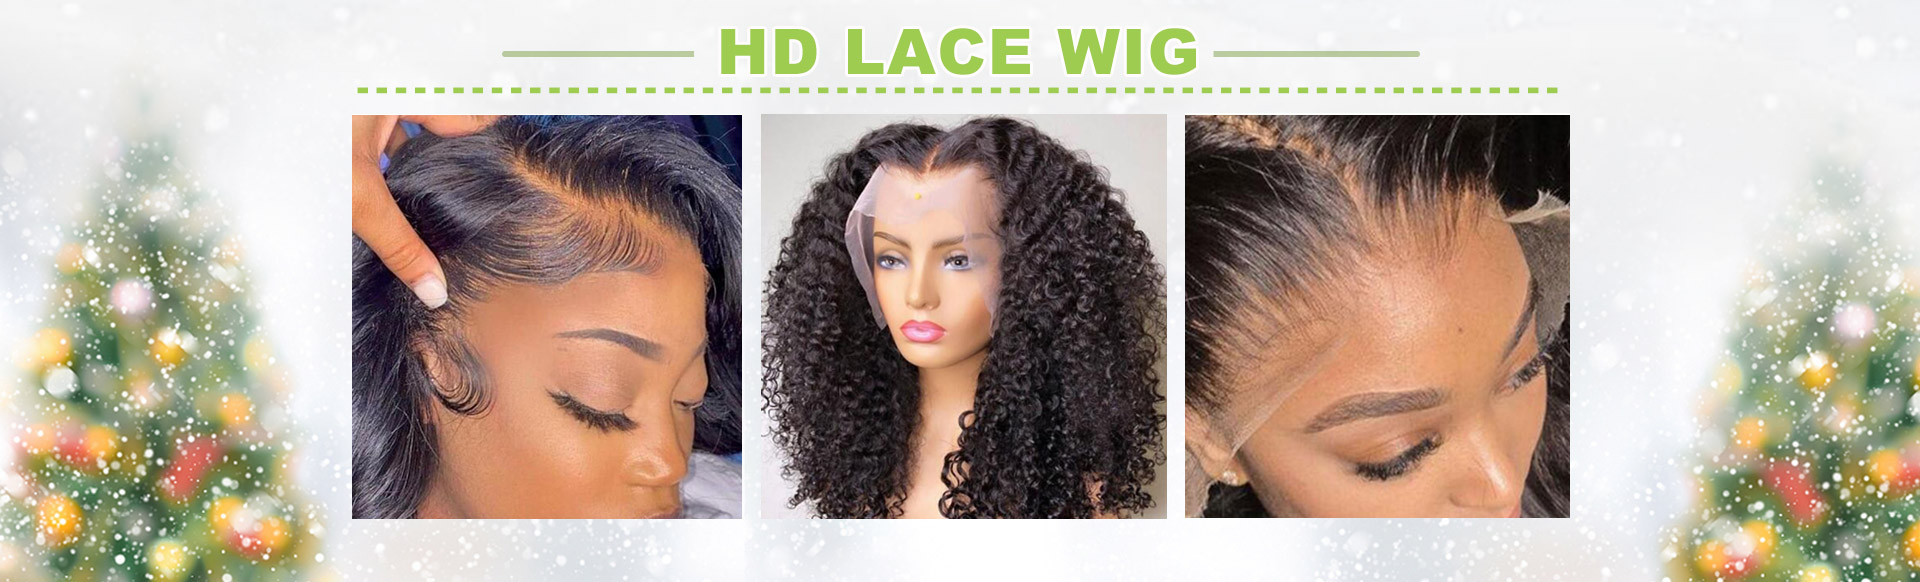 hd-lace-wigs